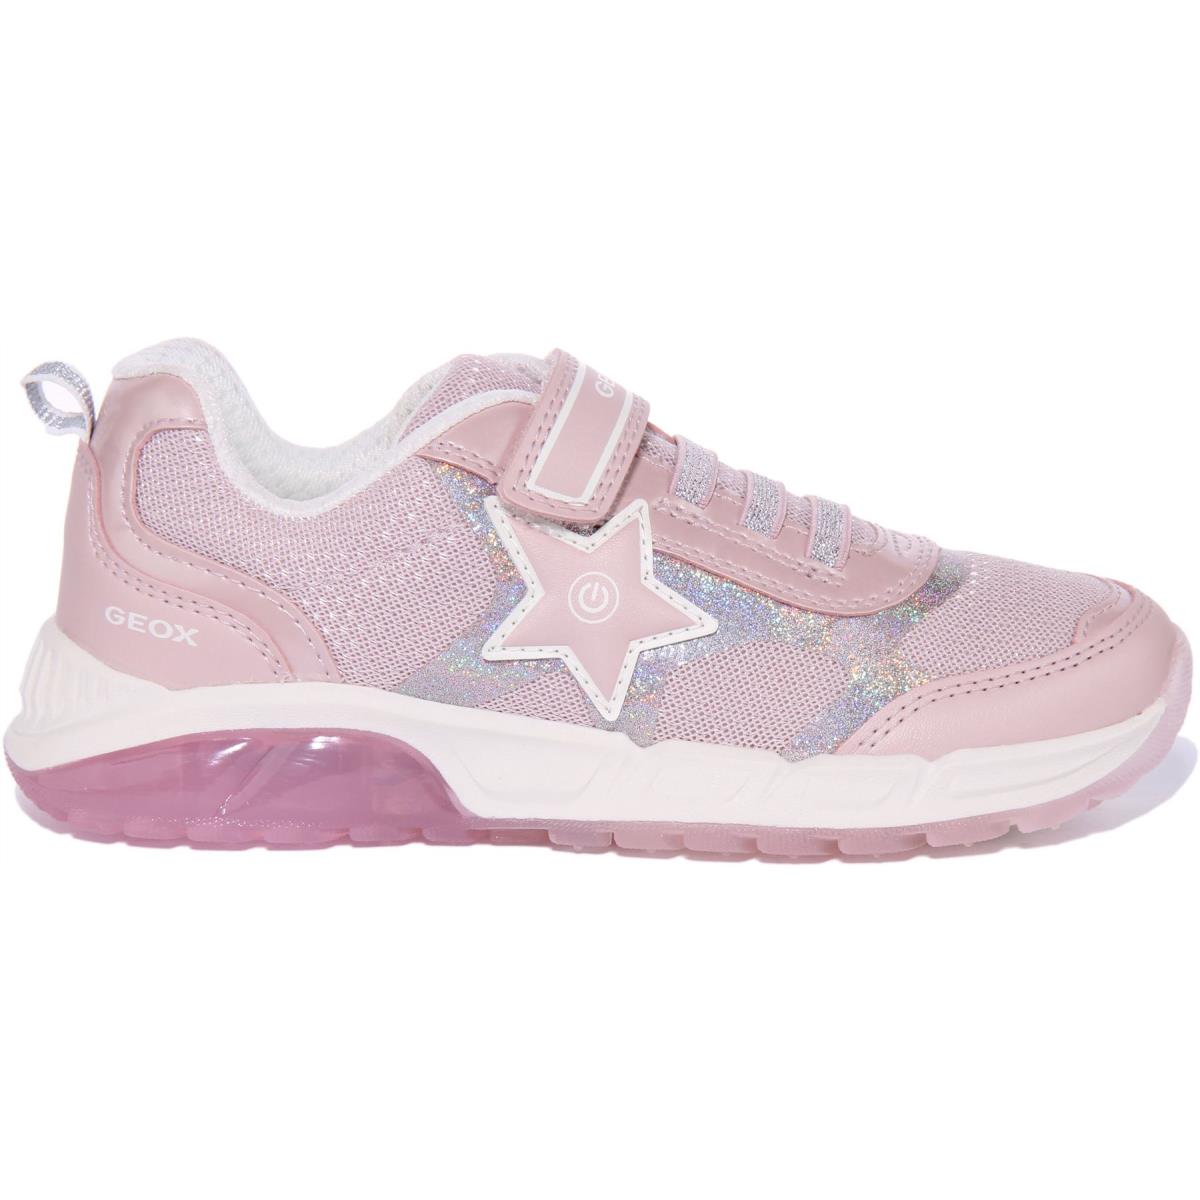 Geox J Spaziale Girls Single Strap Light Up Sneakers In Pink Size US 1C - 4Y